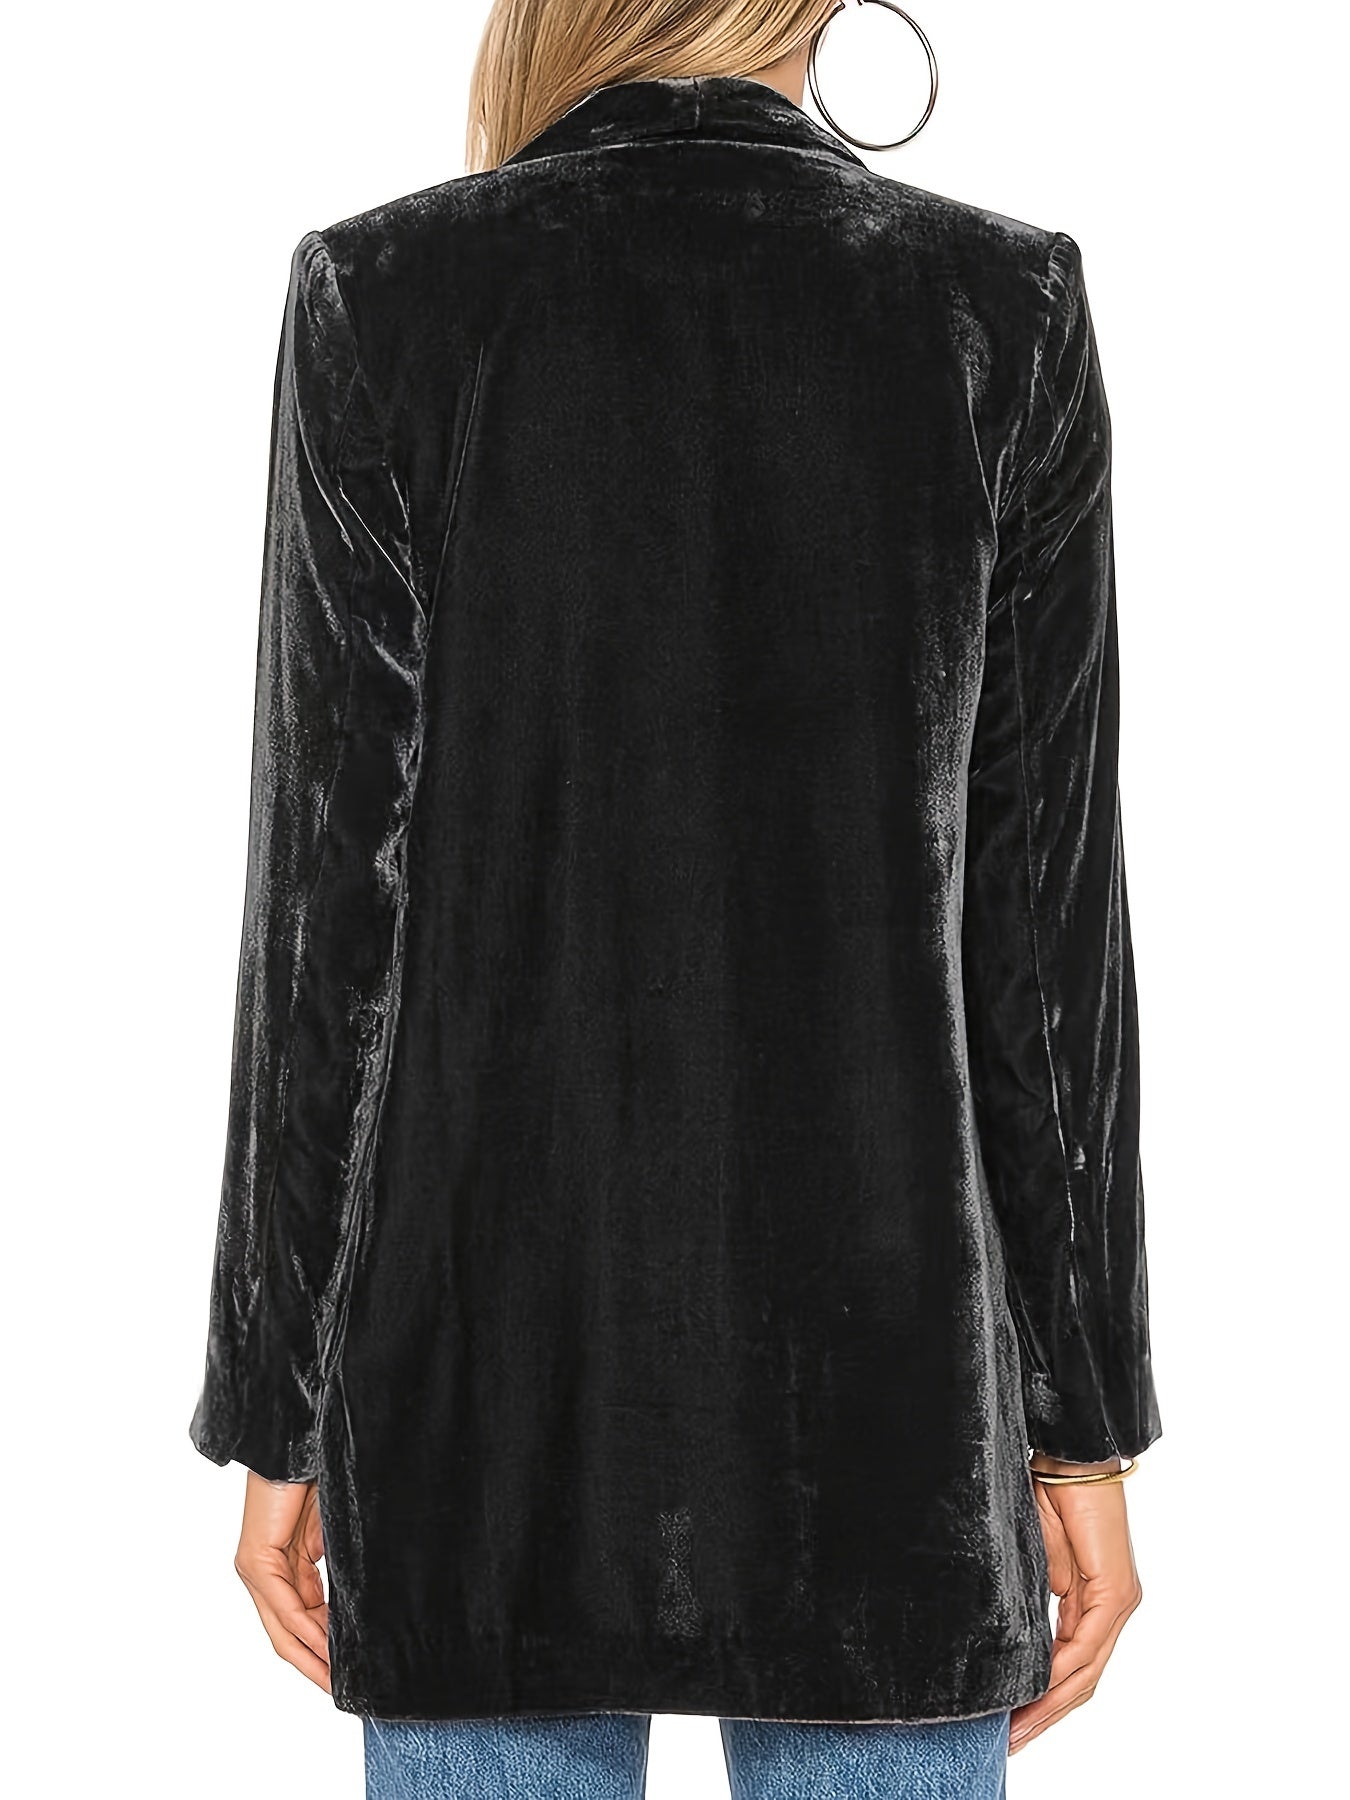 Solid Lapel Open Front Jacket, Versatile Long Sleeve Velvet Outwear For Fall & Winter, Women's Clothing